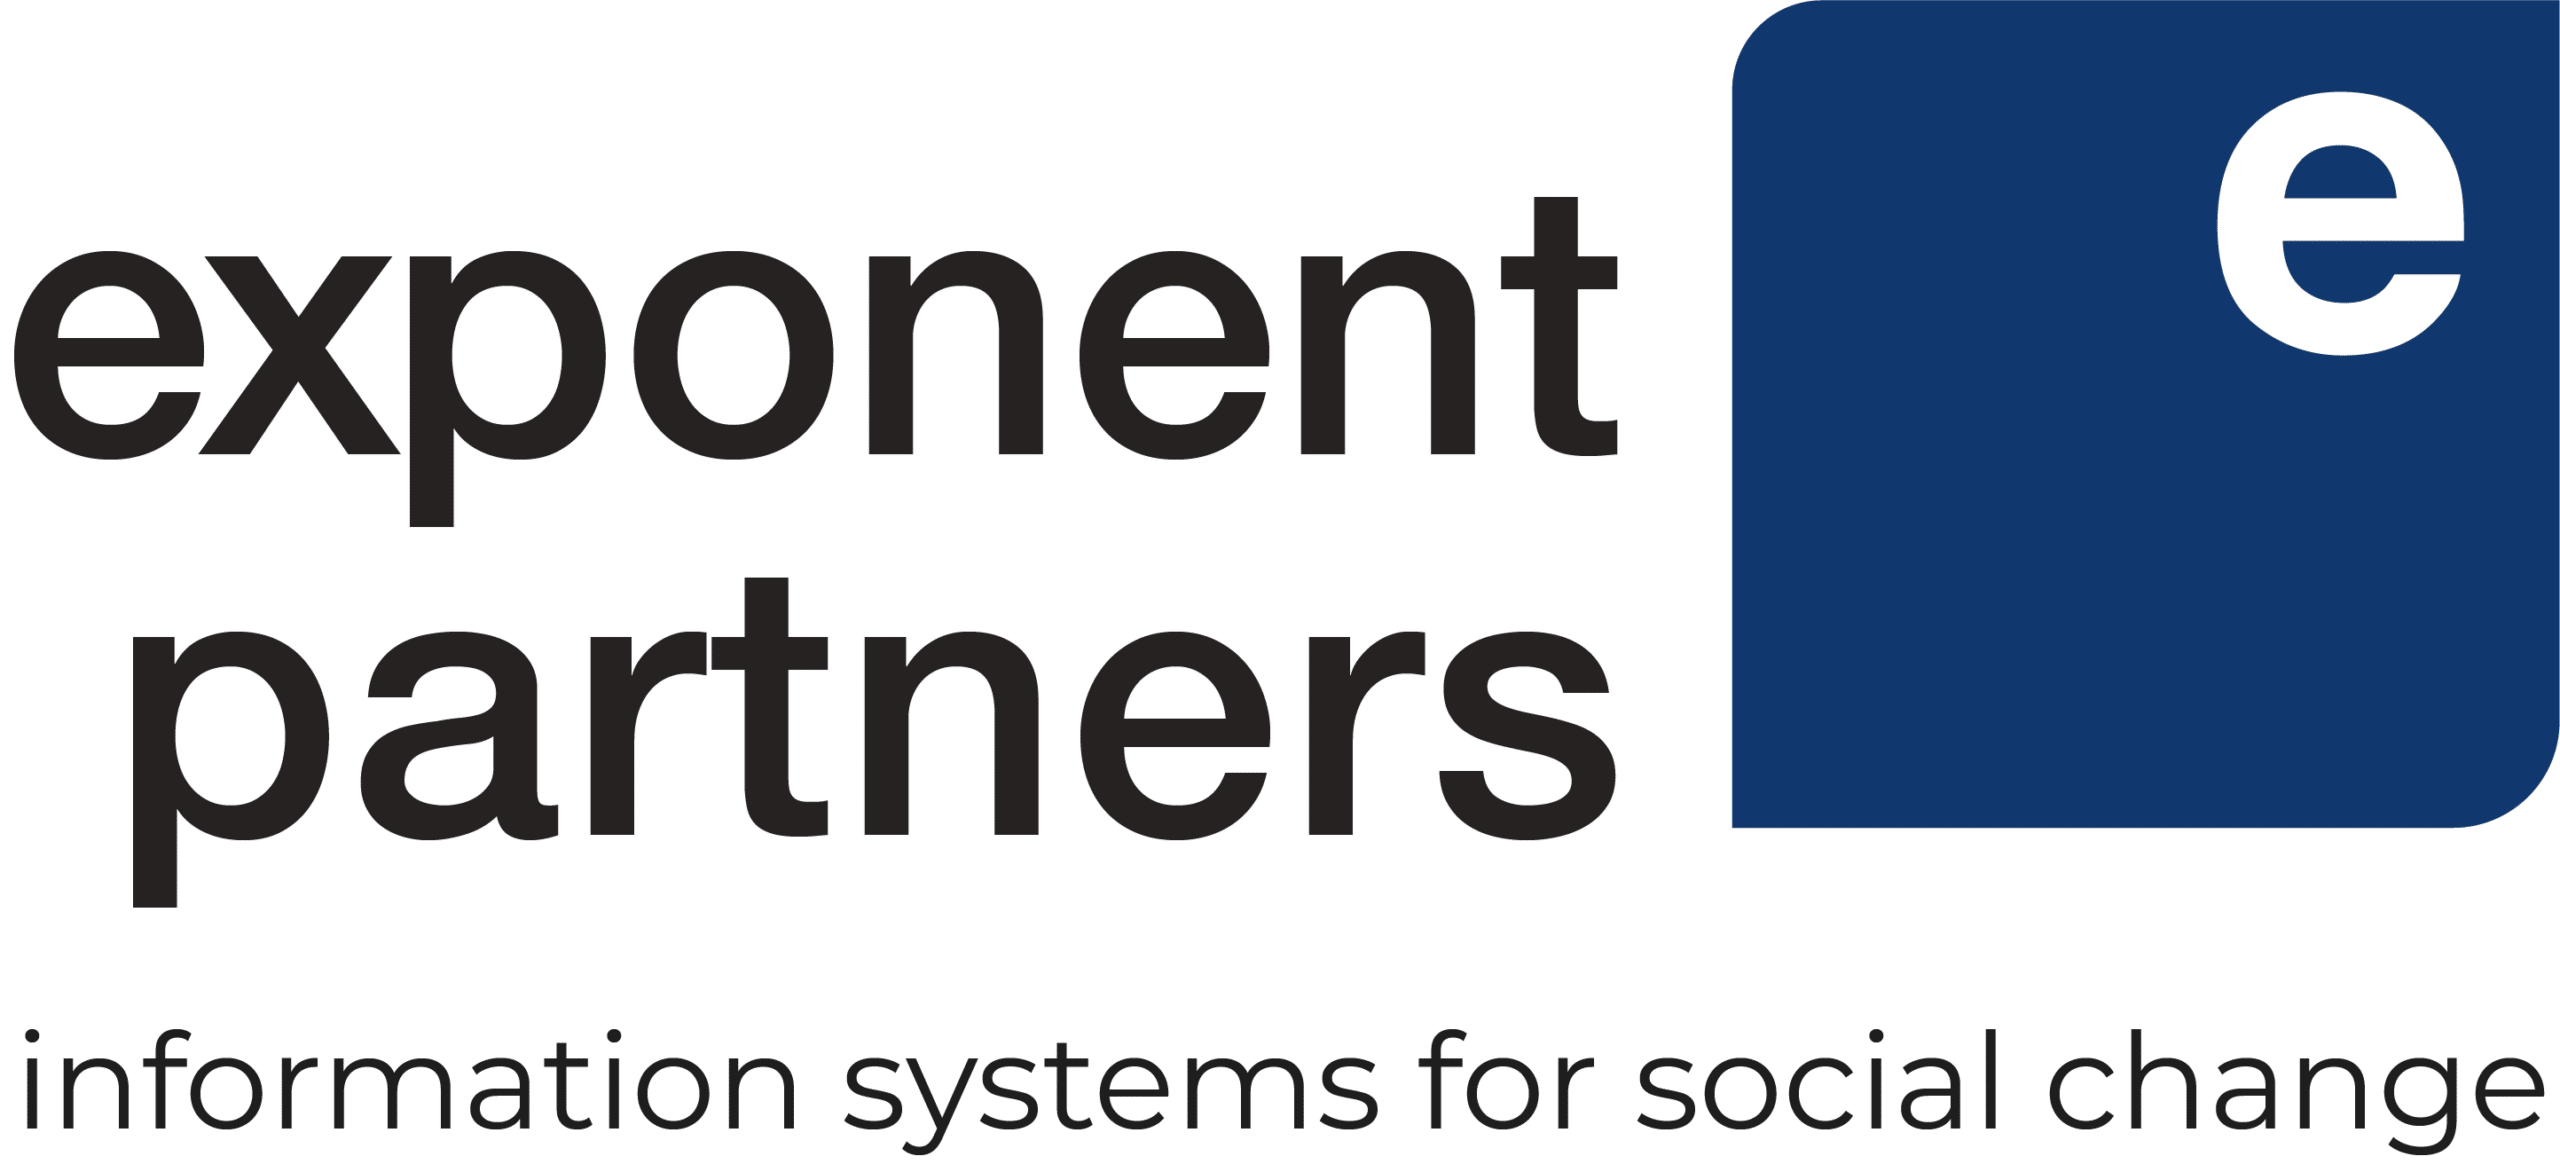 Exponent partners logo